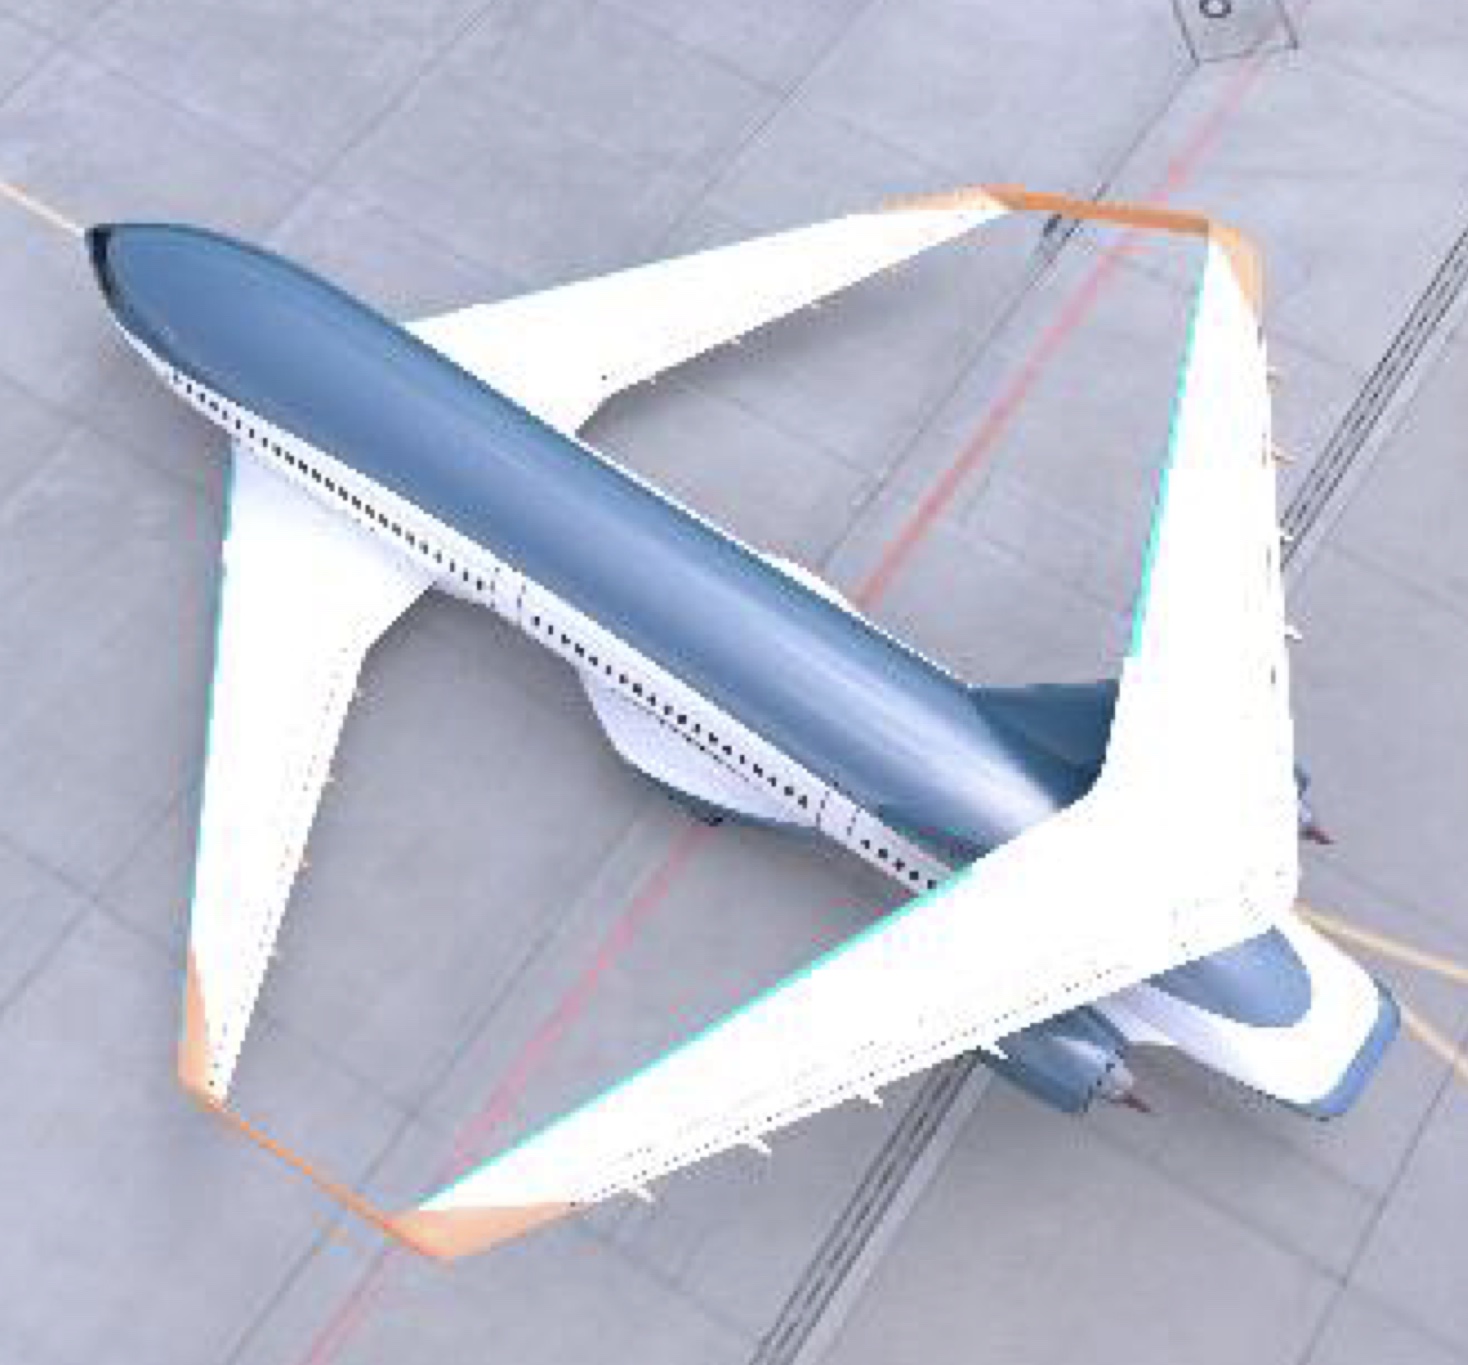 Parsifal Box-wing design, IATA Aircraft Technology Roadmap to 2050